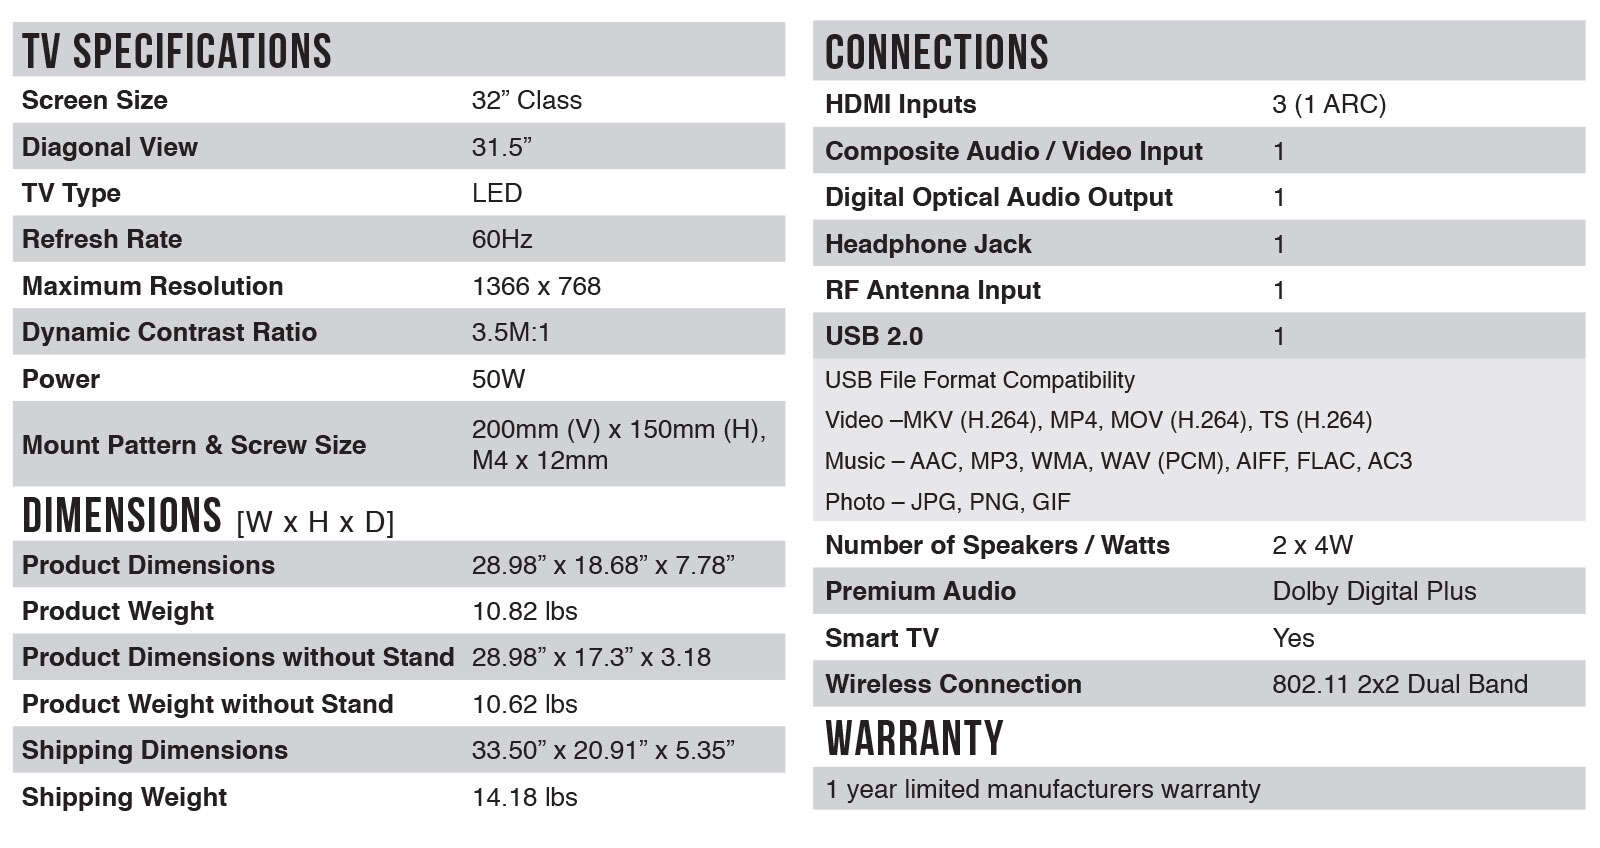 TCL 32” Class S-Series LED HDTV - S3800